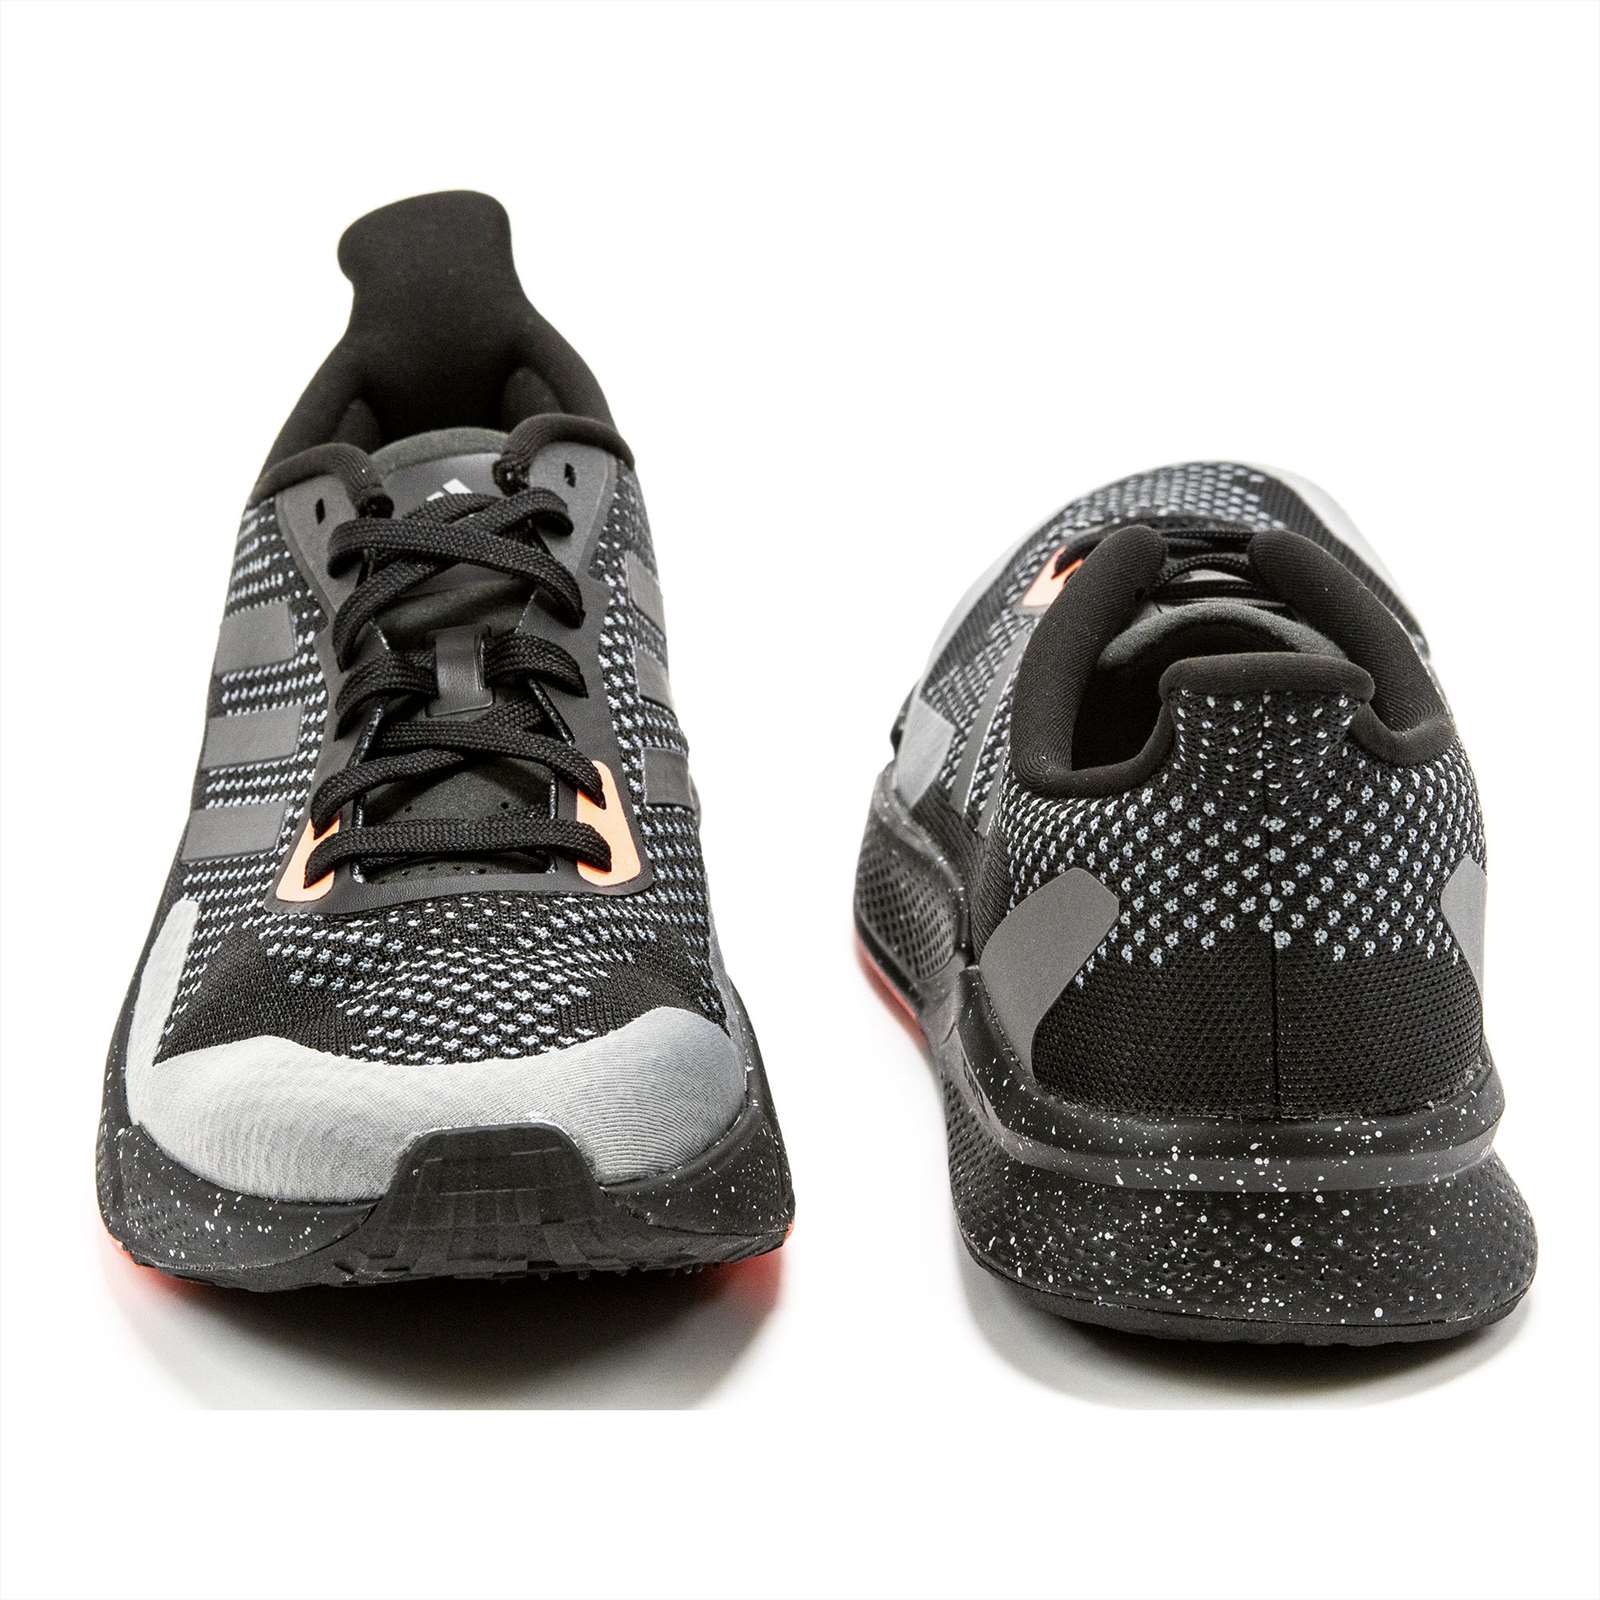 Adidas Men X9000l2 Running Shoe